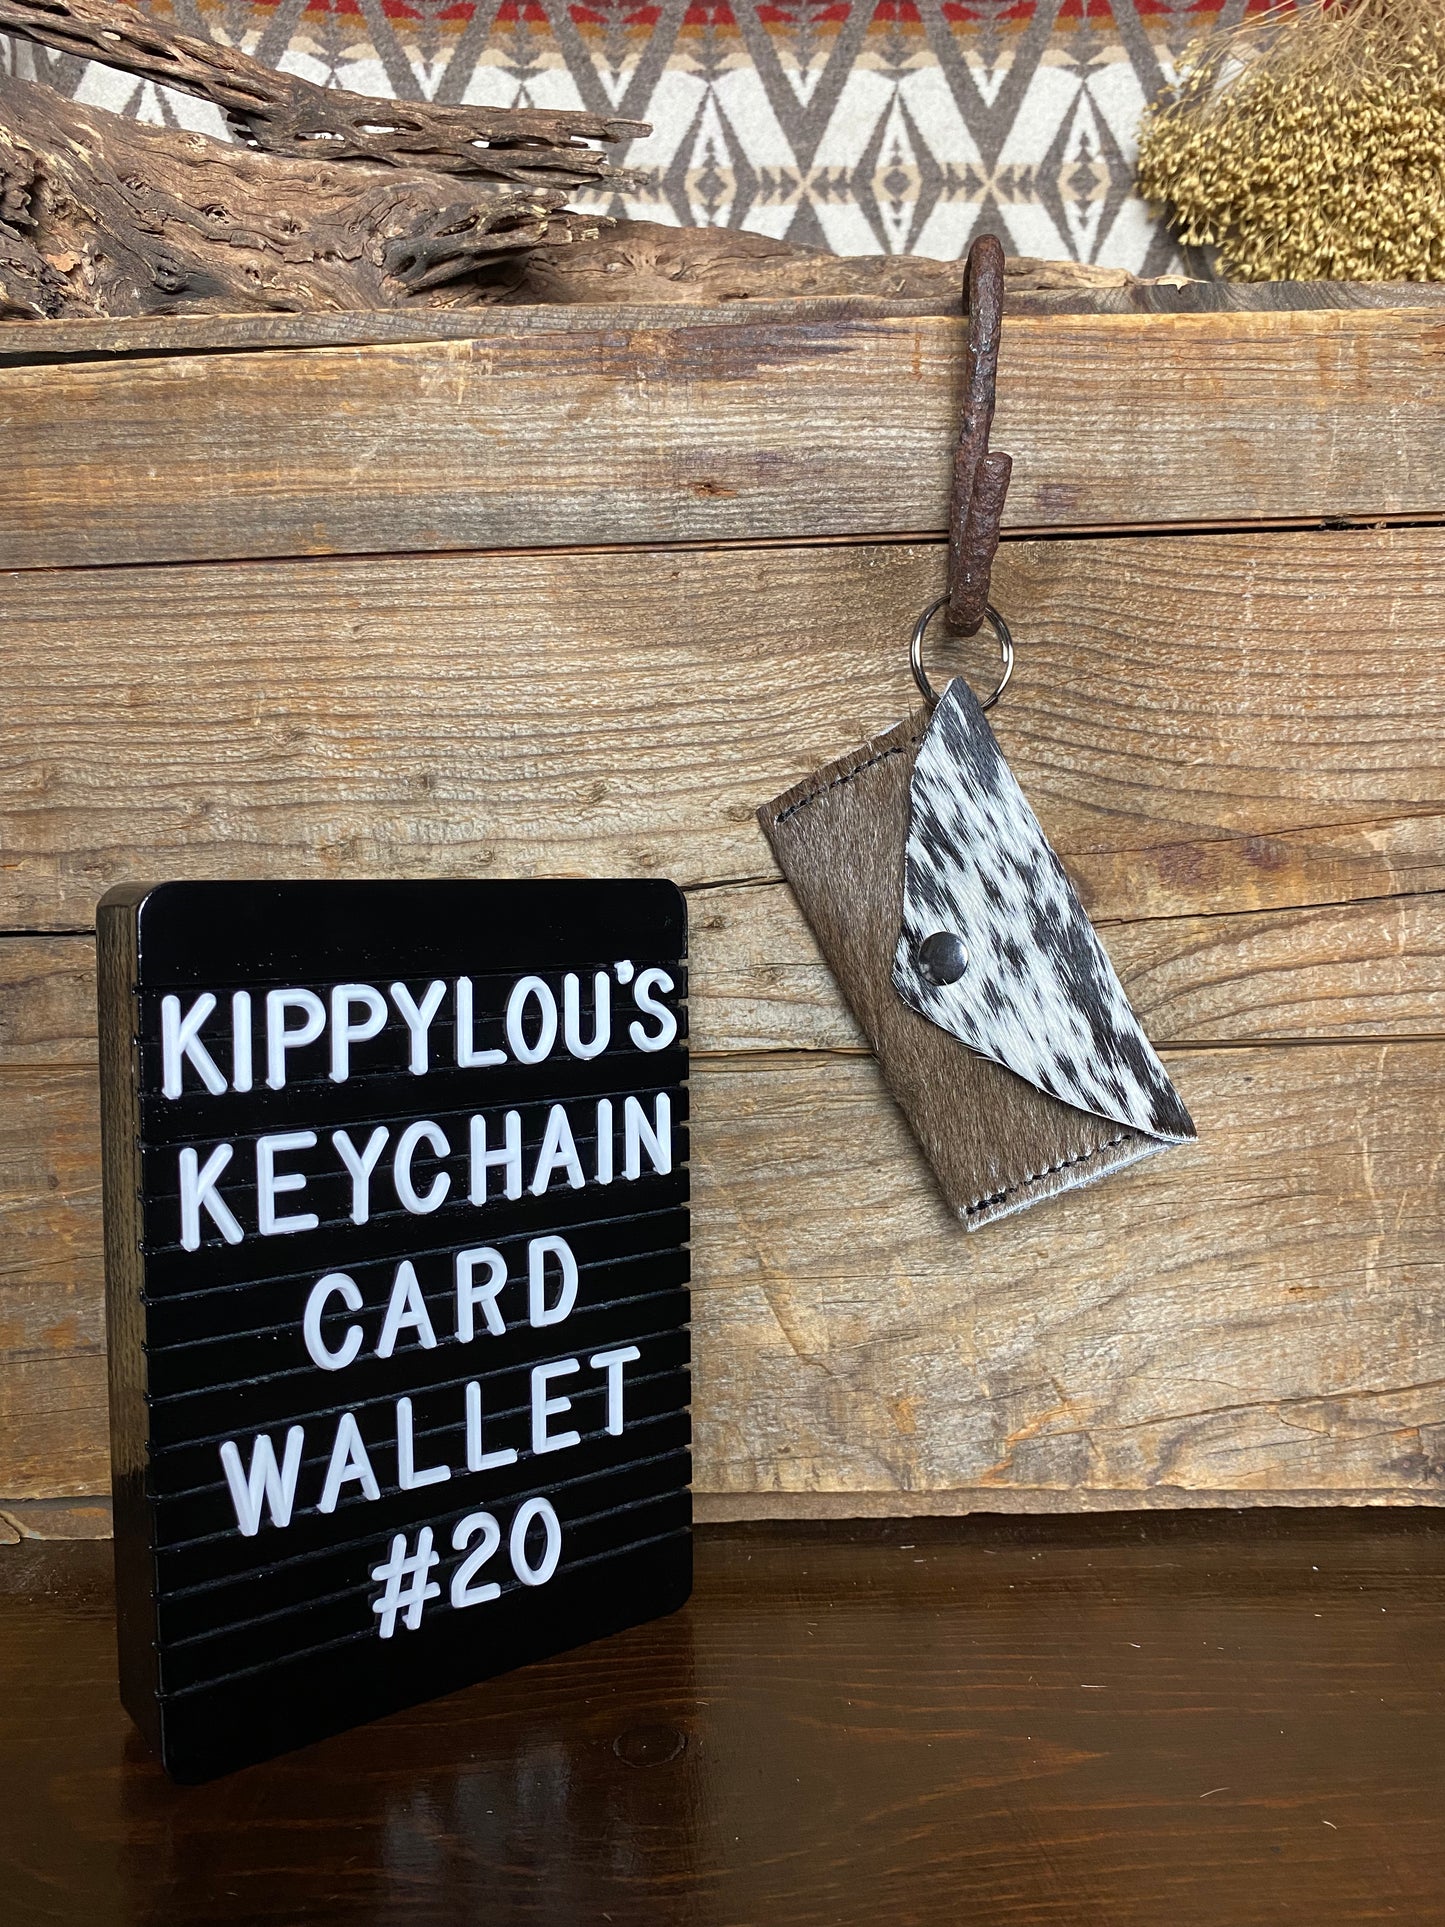 Keychain Card Wallet #20